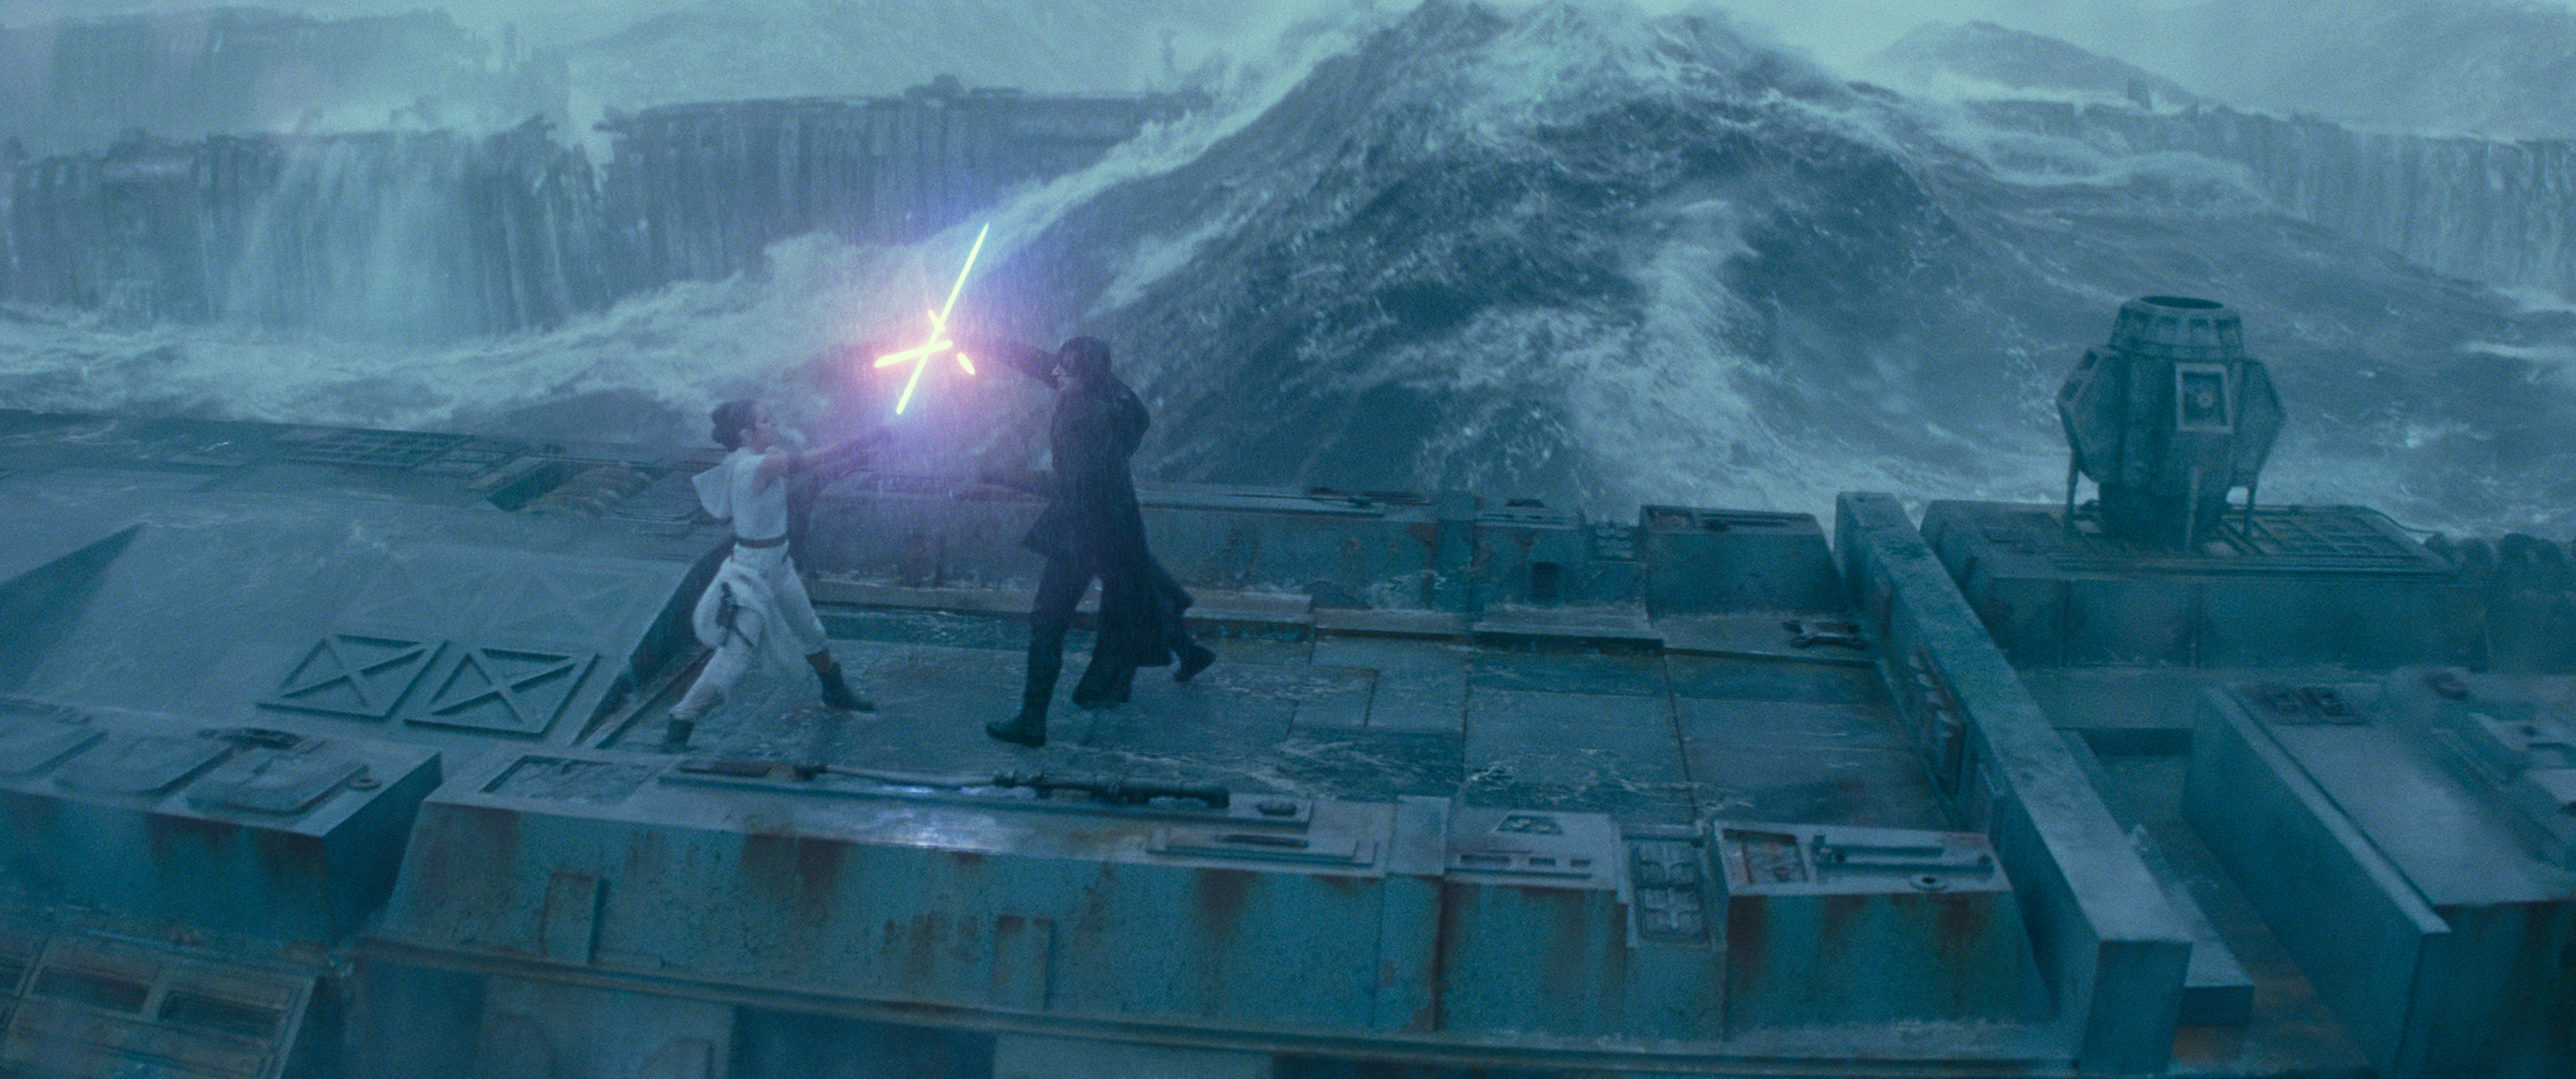 rey and kylo ren battle in the rain atop sunken death star wreckage in Star Wars: The Rise of Skywalker